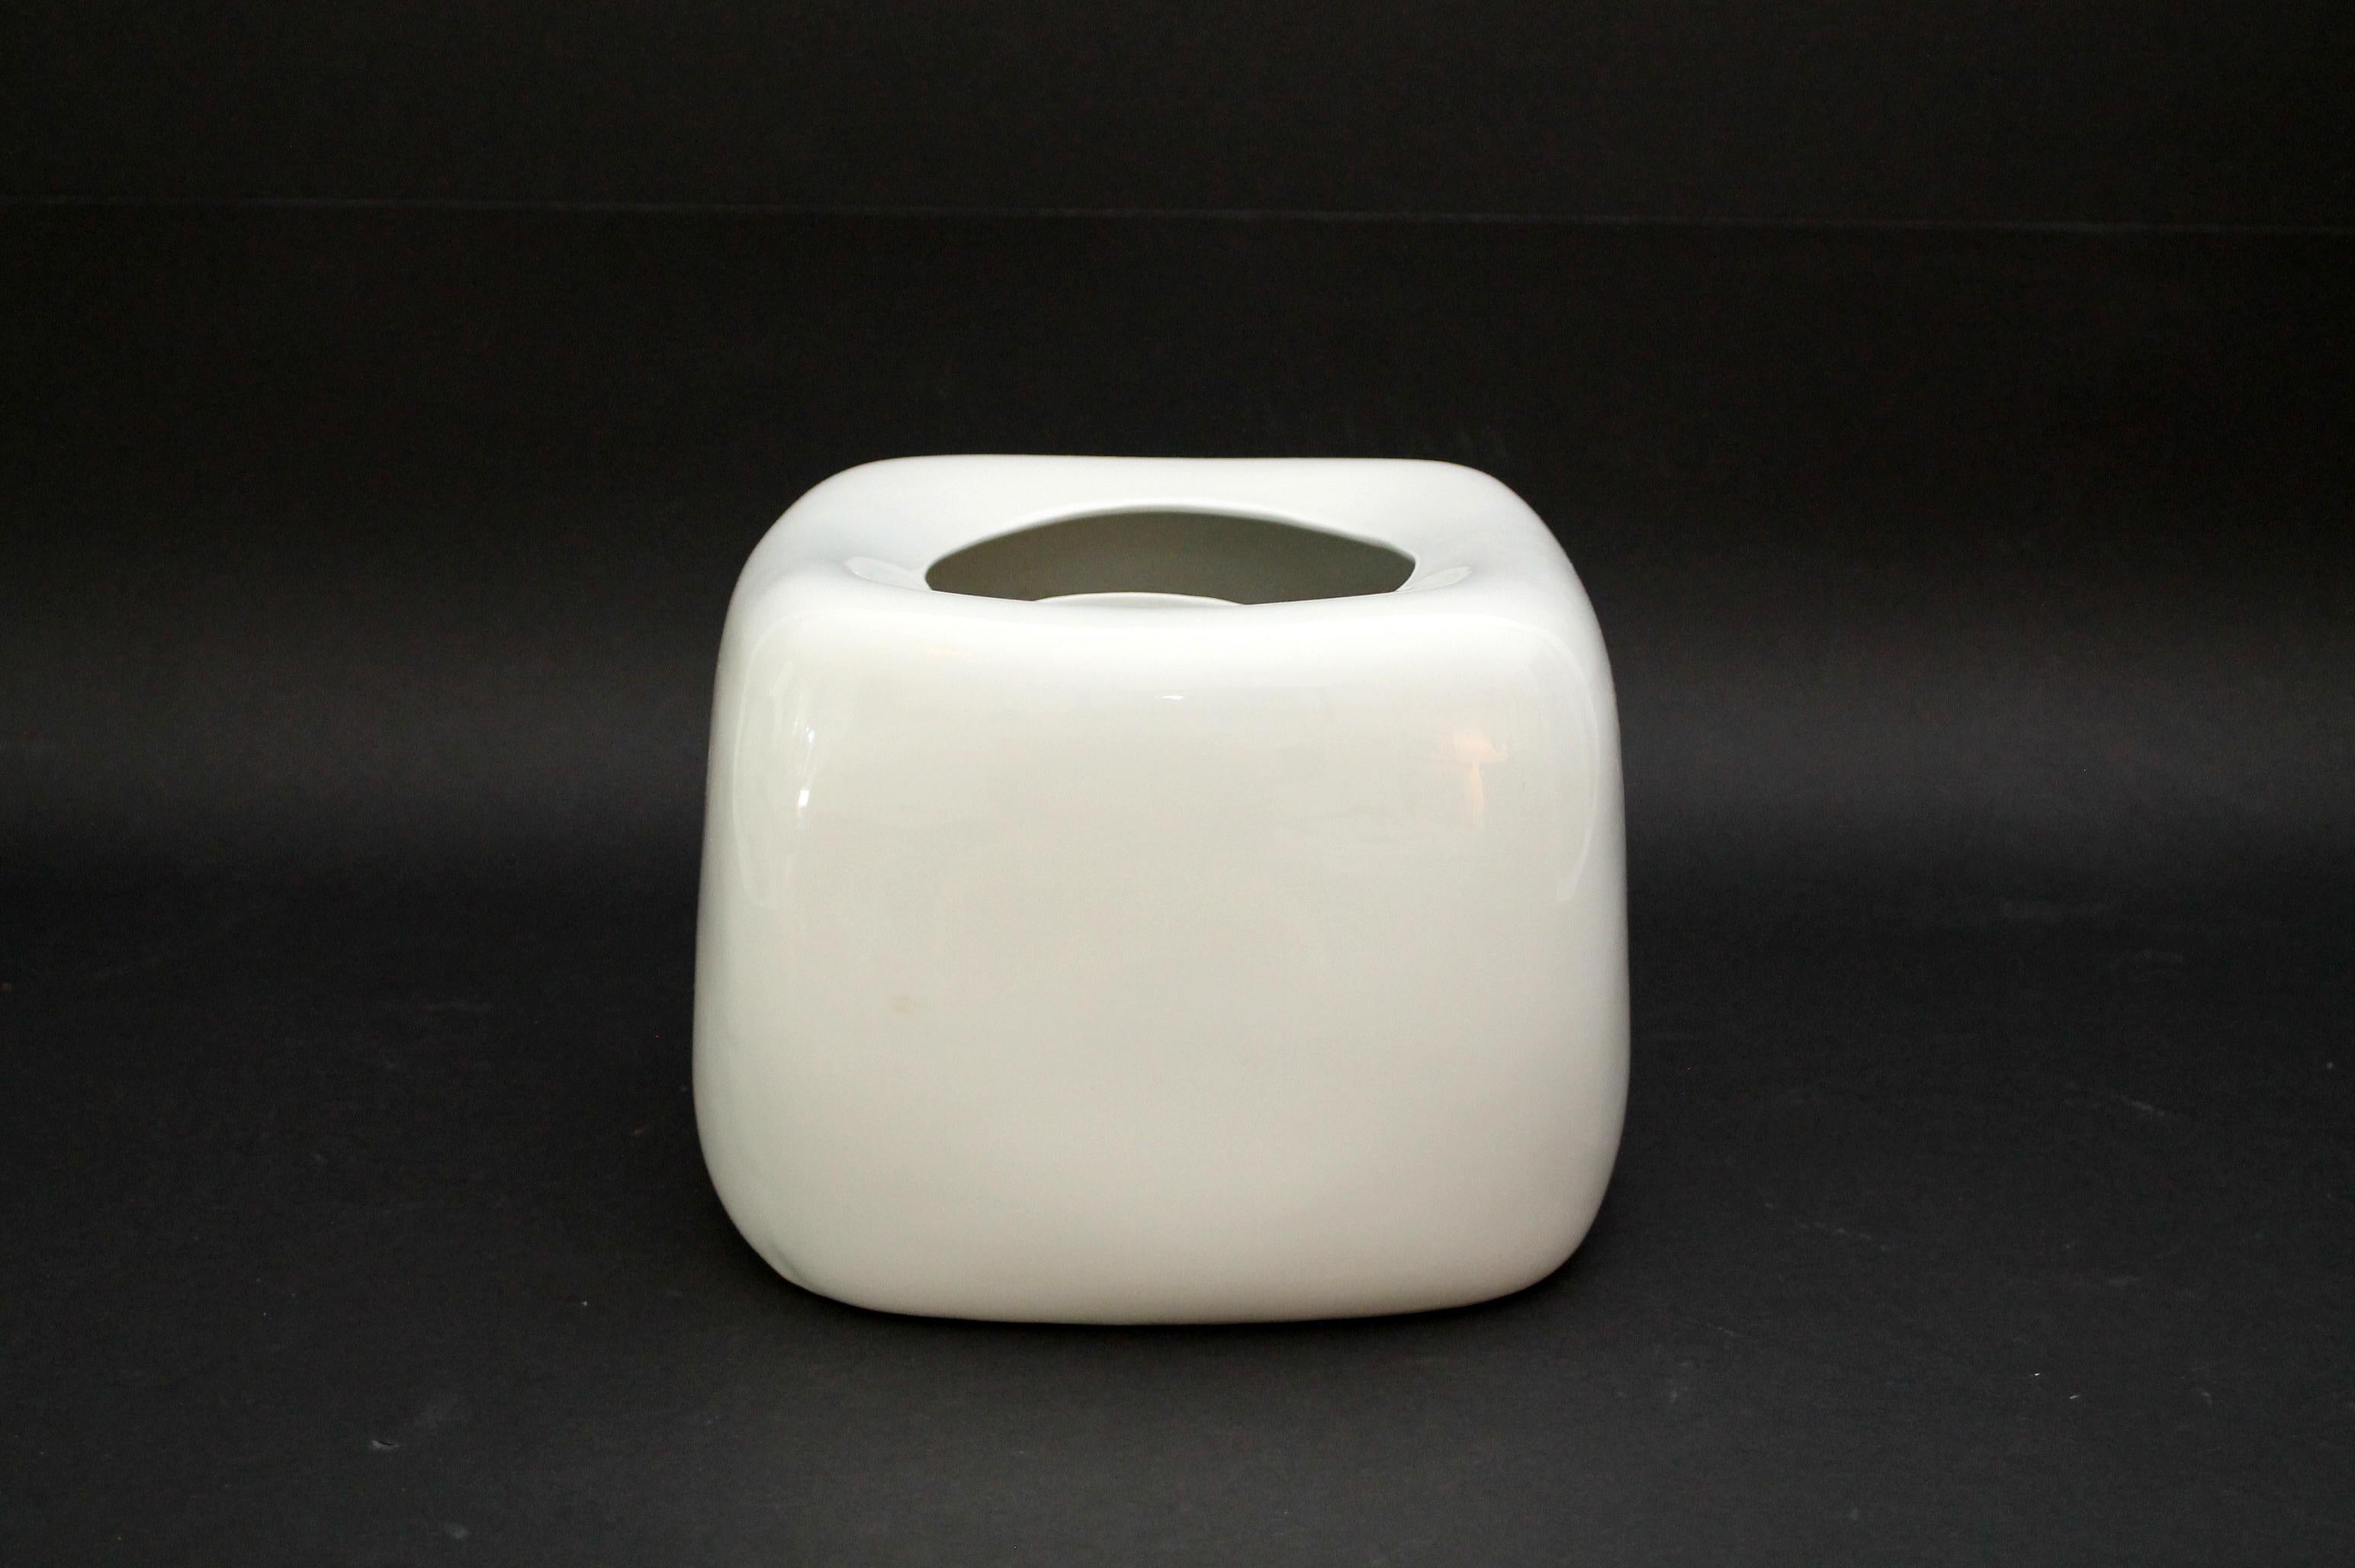 Hand-made 1960's original modernist mid-century modern ceramic vase.
Designed by Pierre Lebe (1929-2008)
French ceramist, sculptor, painter, draftsman and cartoonist. 

Manufacturer: Virebent
Technique: Off-white glazed barbotine
Design period: